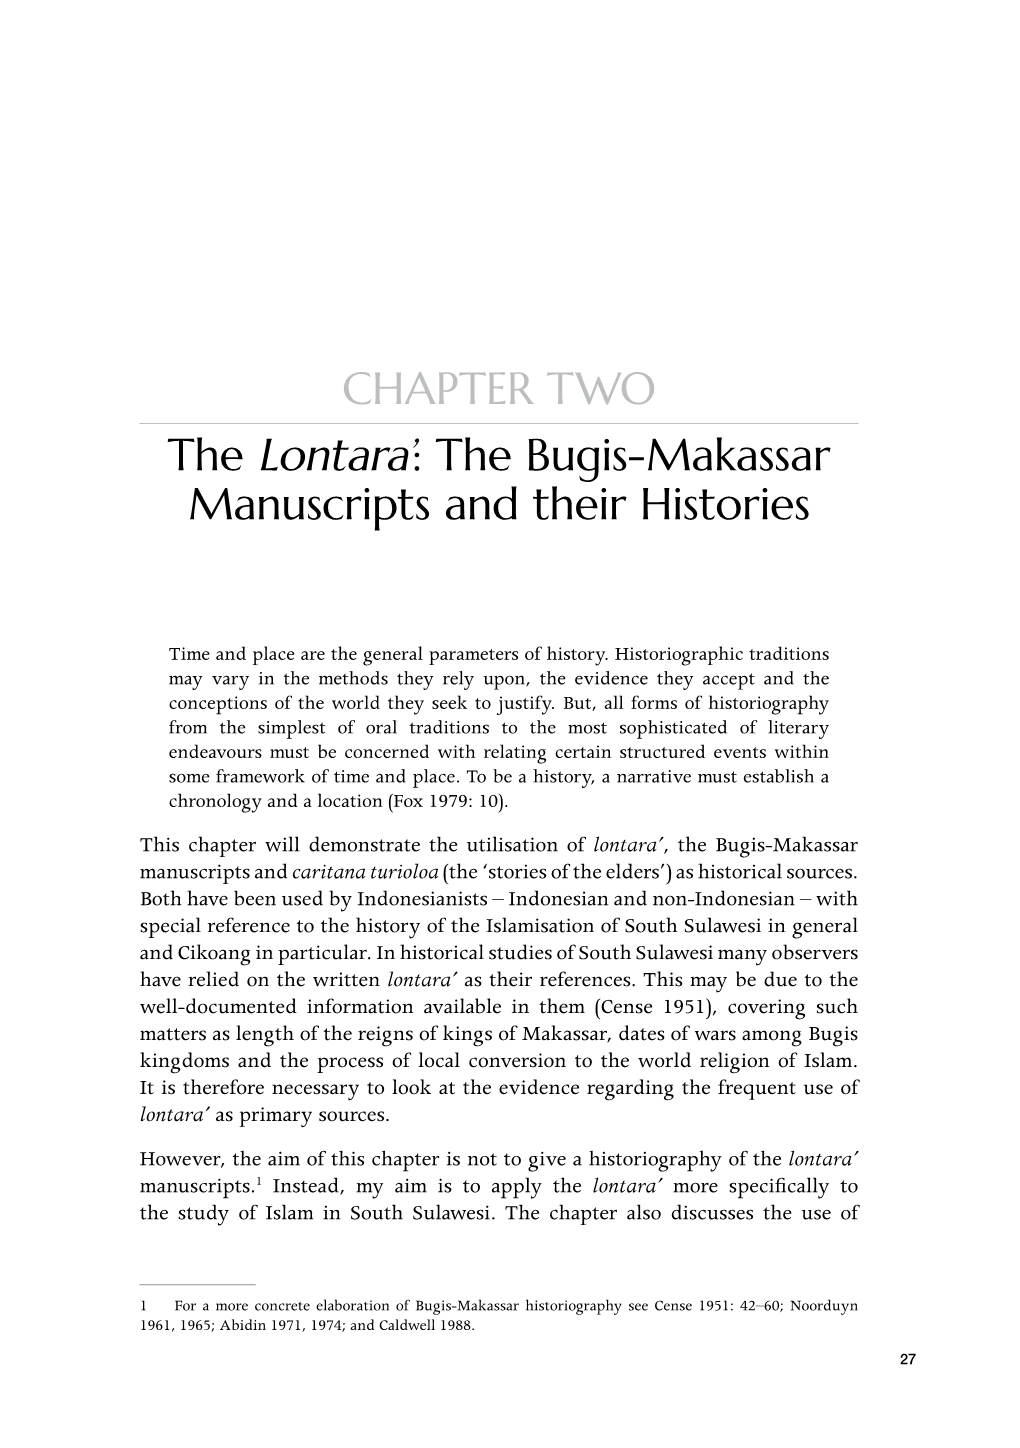 The Bugis-Makassar Manuscripts and Their Histories